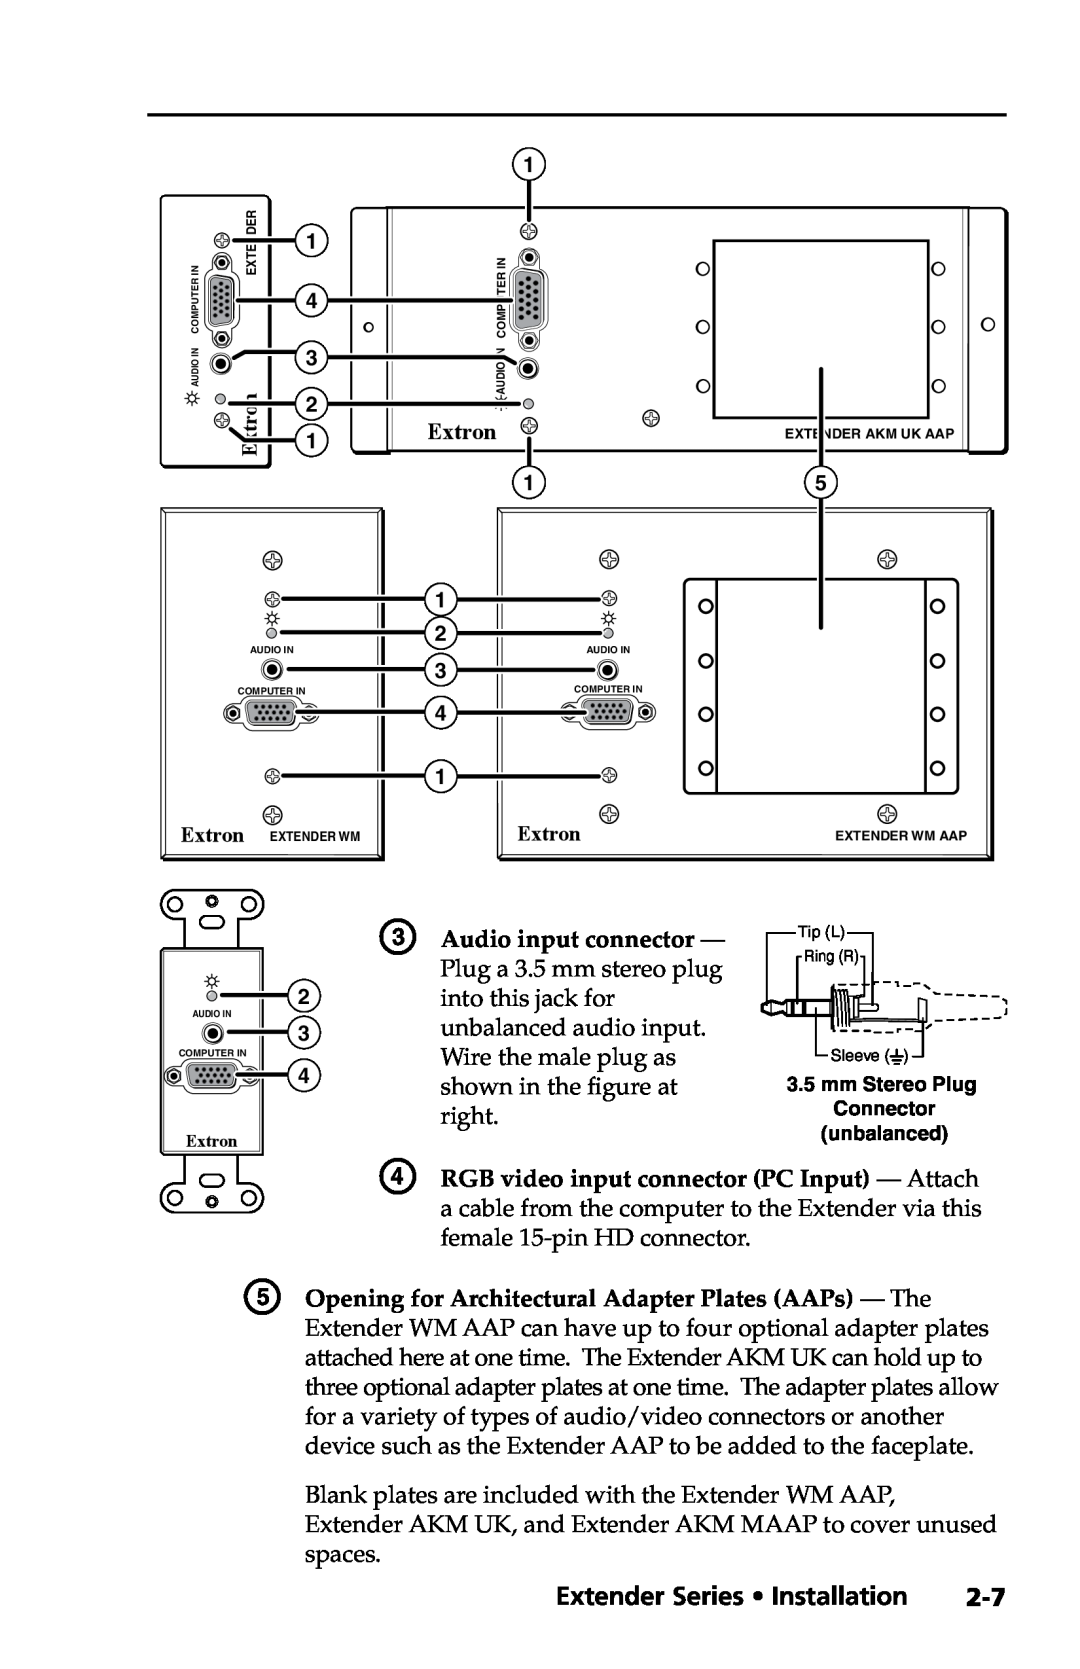 Extron electronic Extender Series manual Audio input connector, RGB video input connector PC Input - Attach, unbalanced 